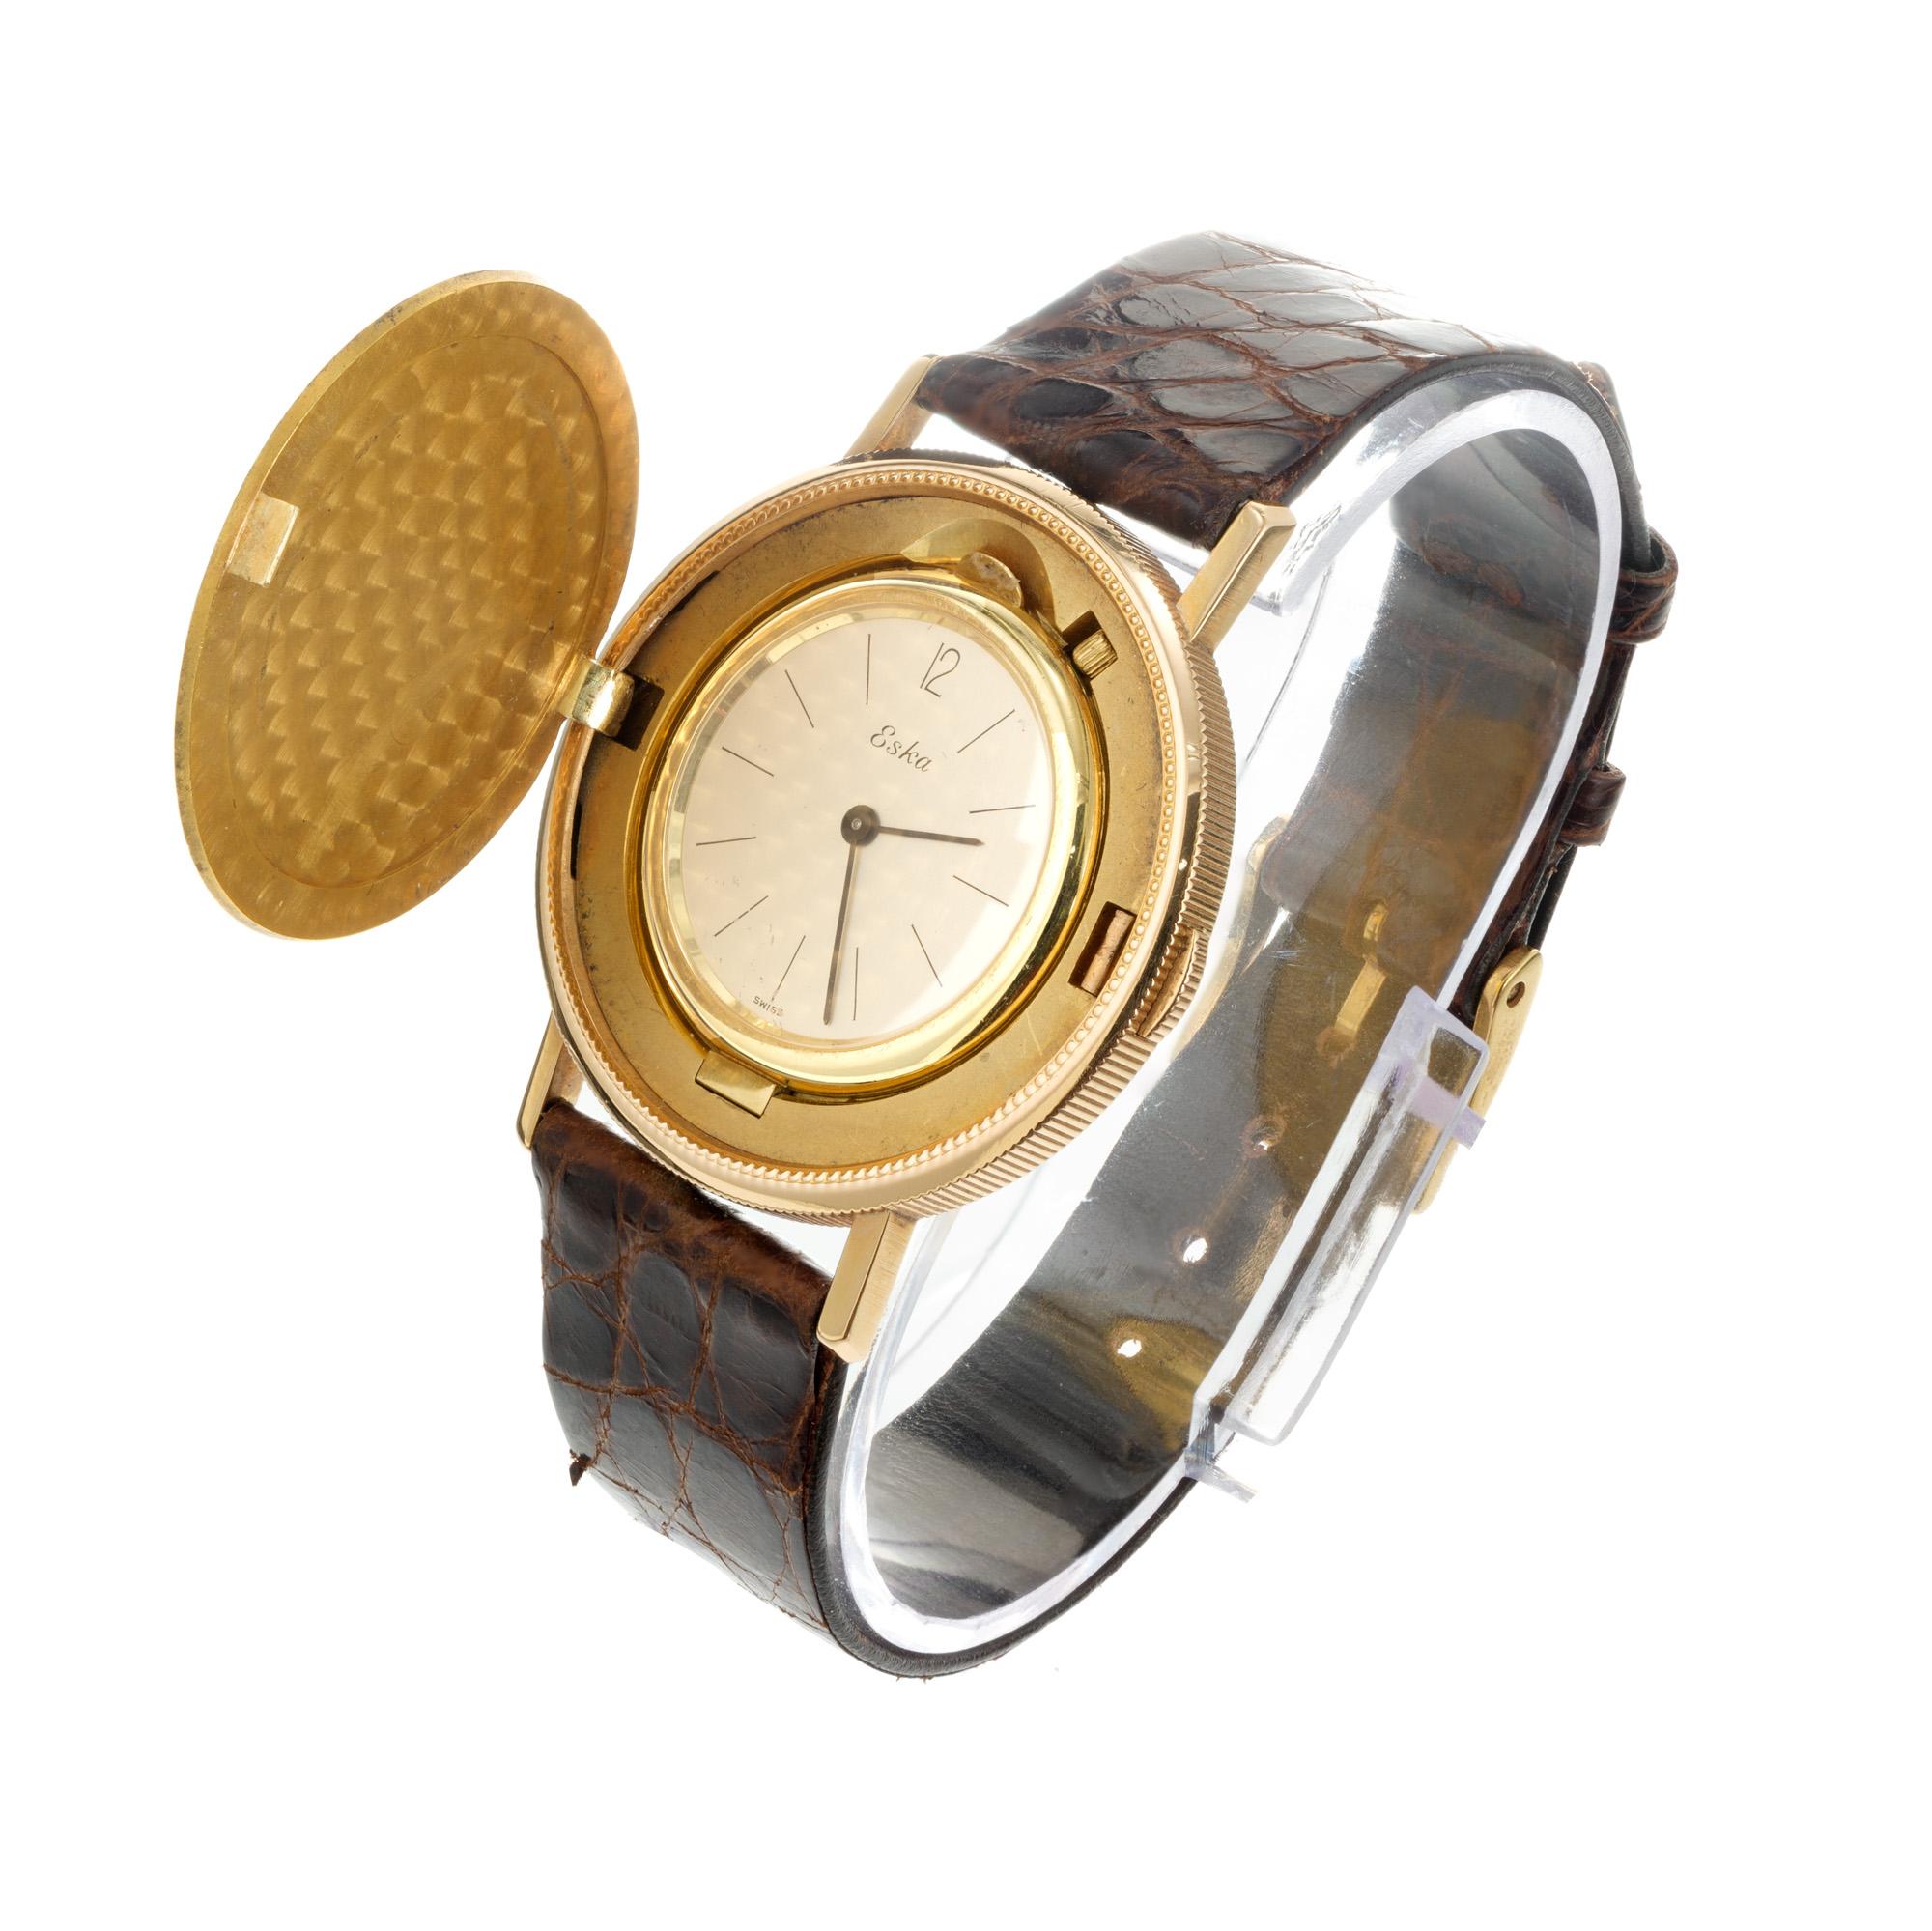 sovereign gold watch